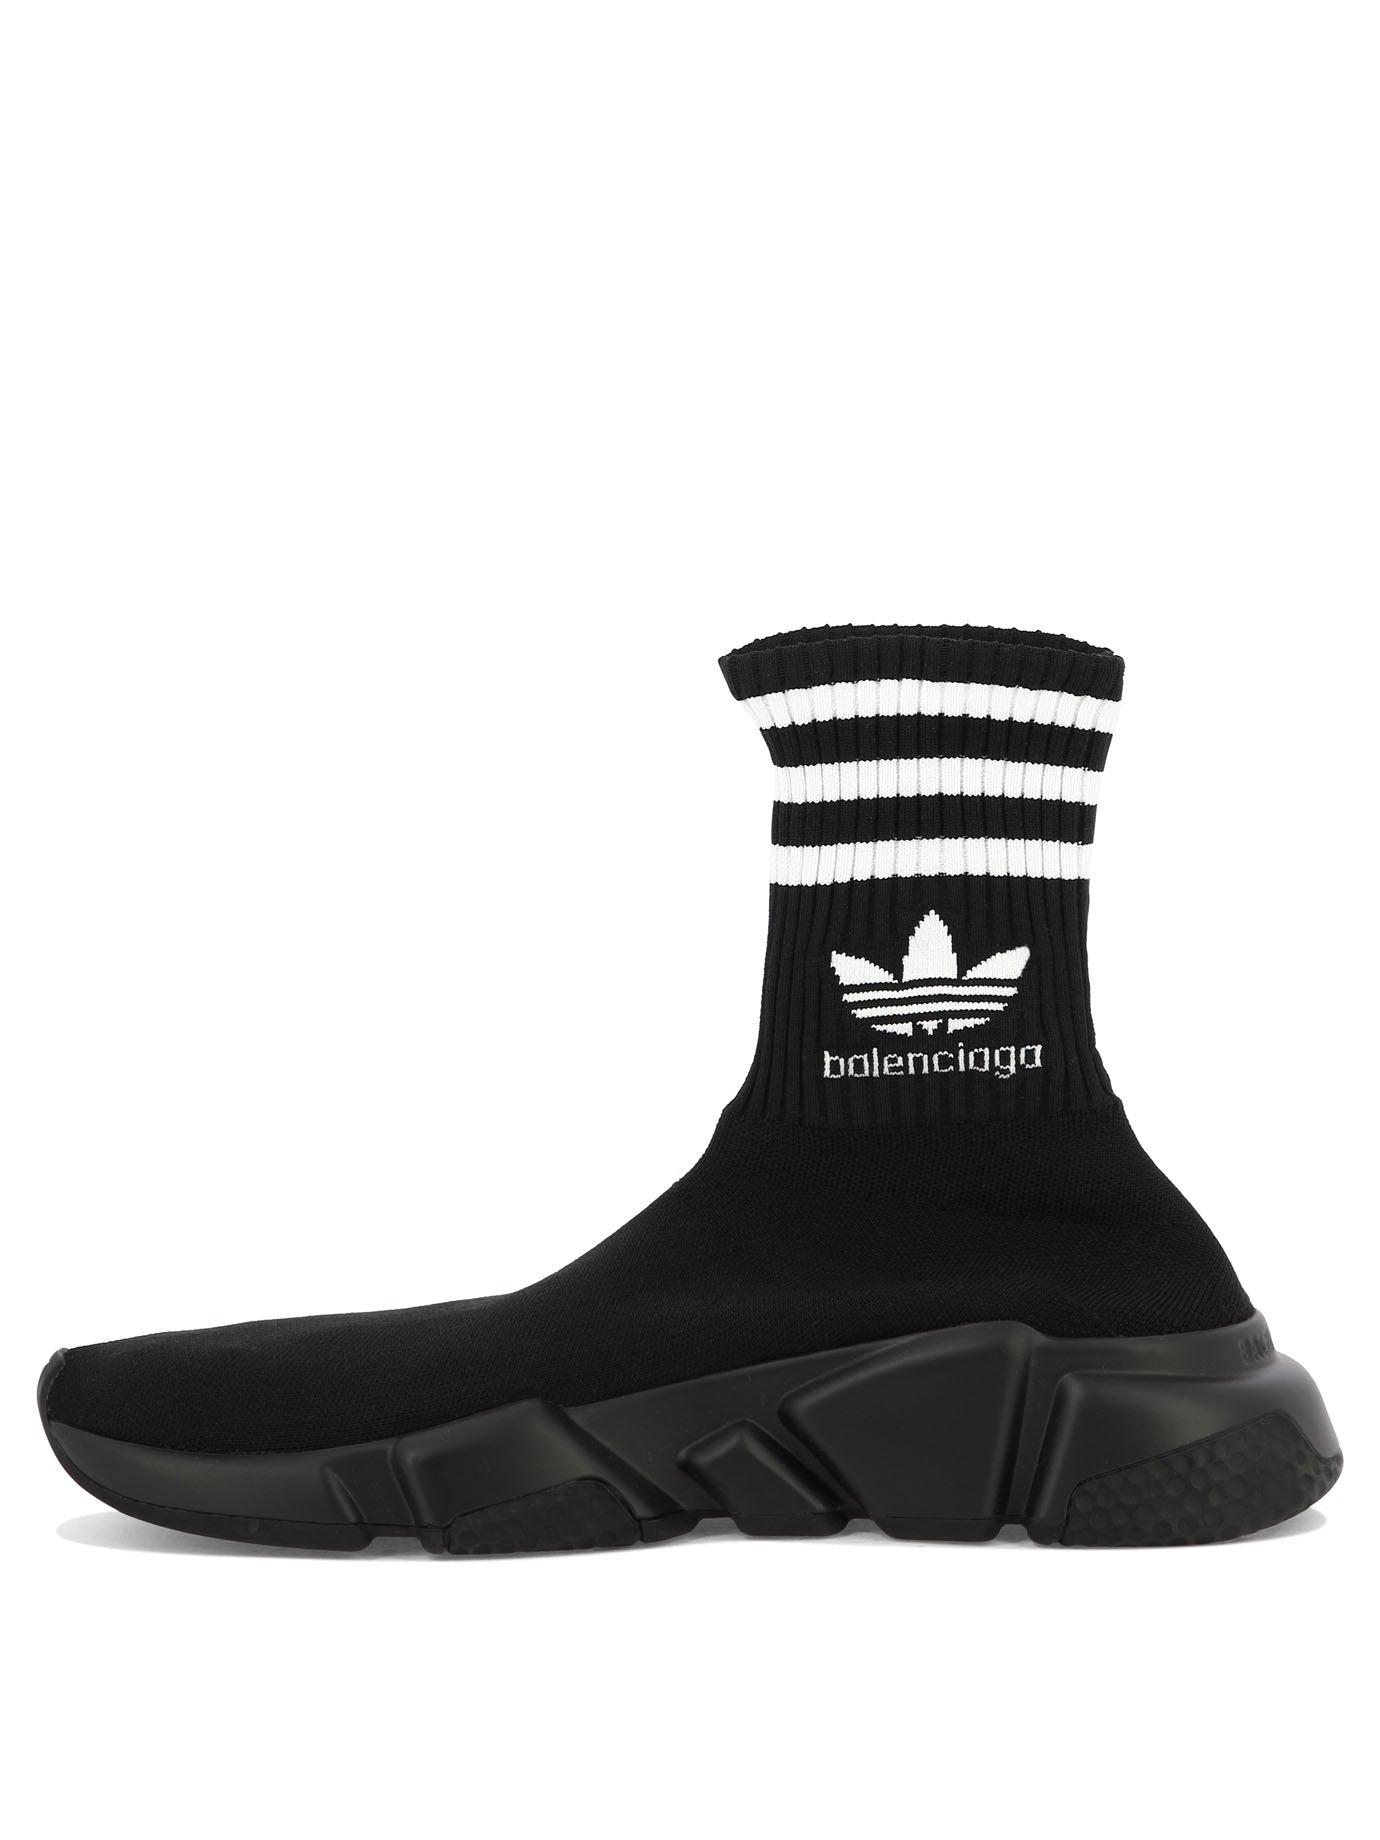 Balenciaga X Adidas "speed" Sneakers in Black | Lyst